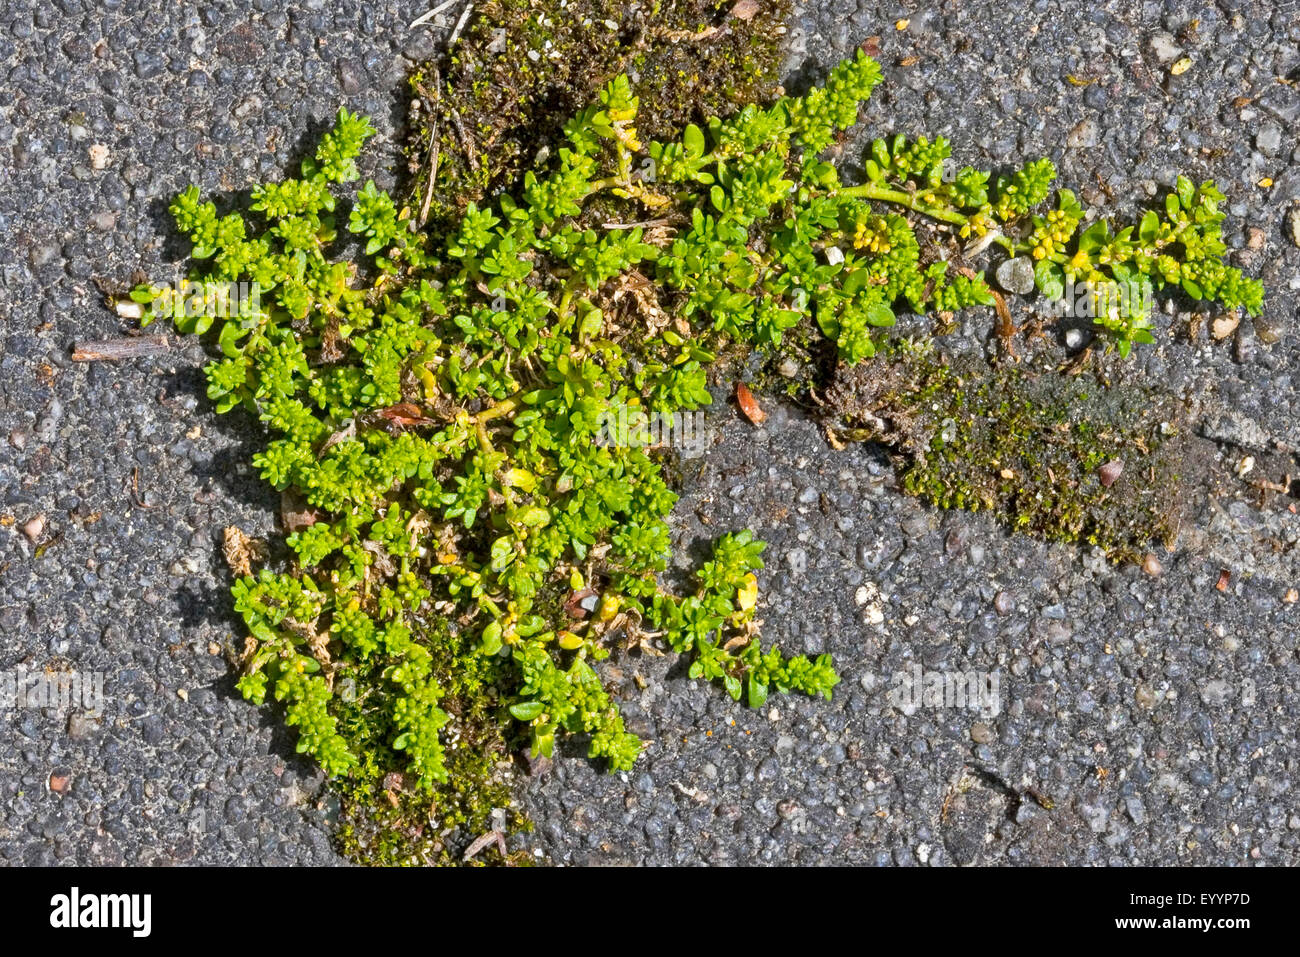 Smooth rupturewort, Smooth burstwort (Herniaria glabra), on a pavement, Germany Stock Photo